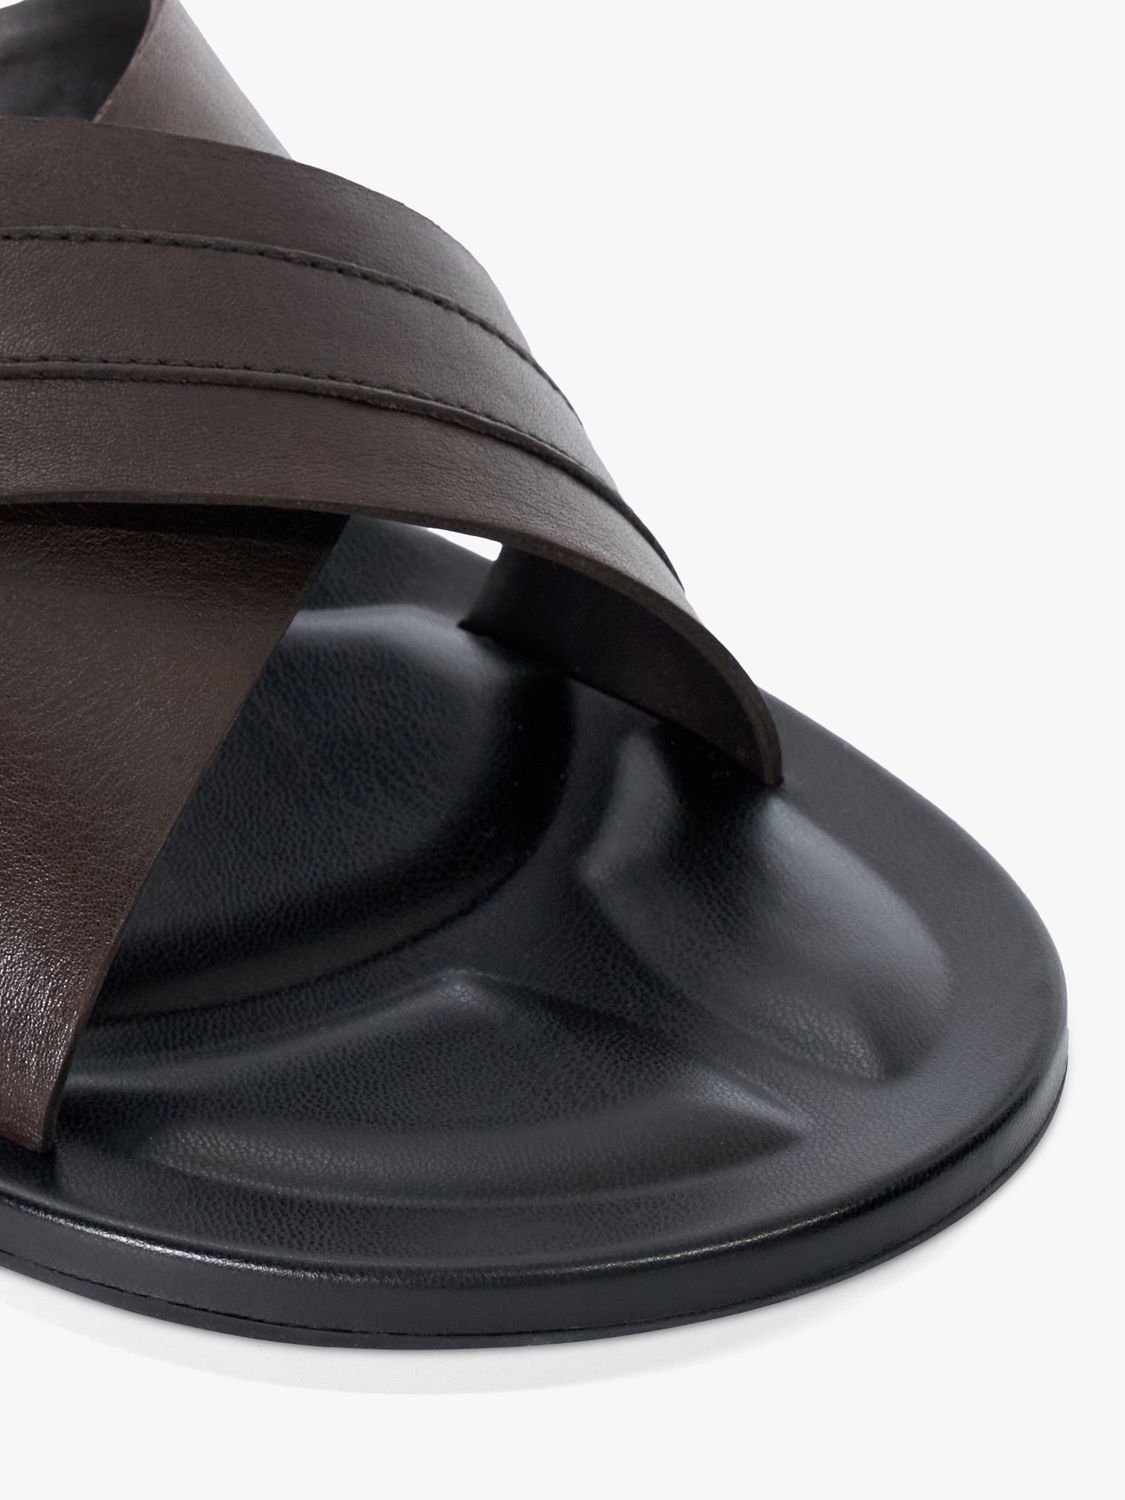 Buy Dune Frankos Cross Strap Leather Sandals, Brown Online at johnlewis.com